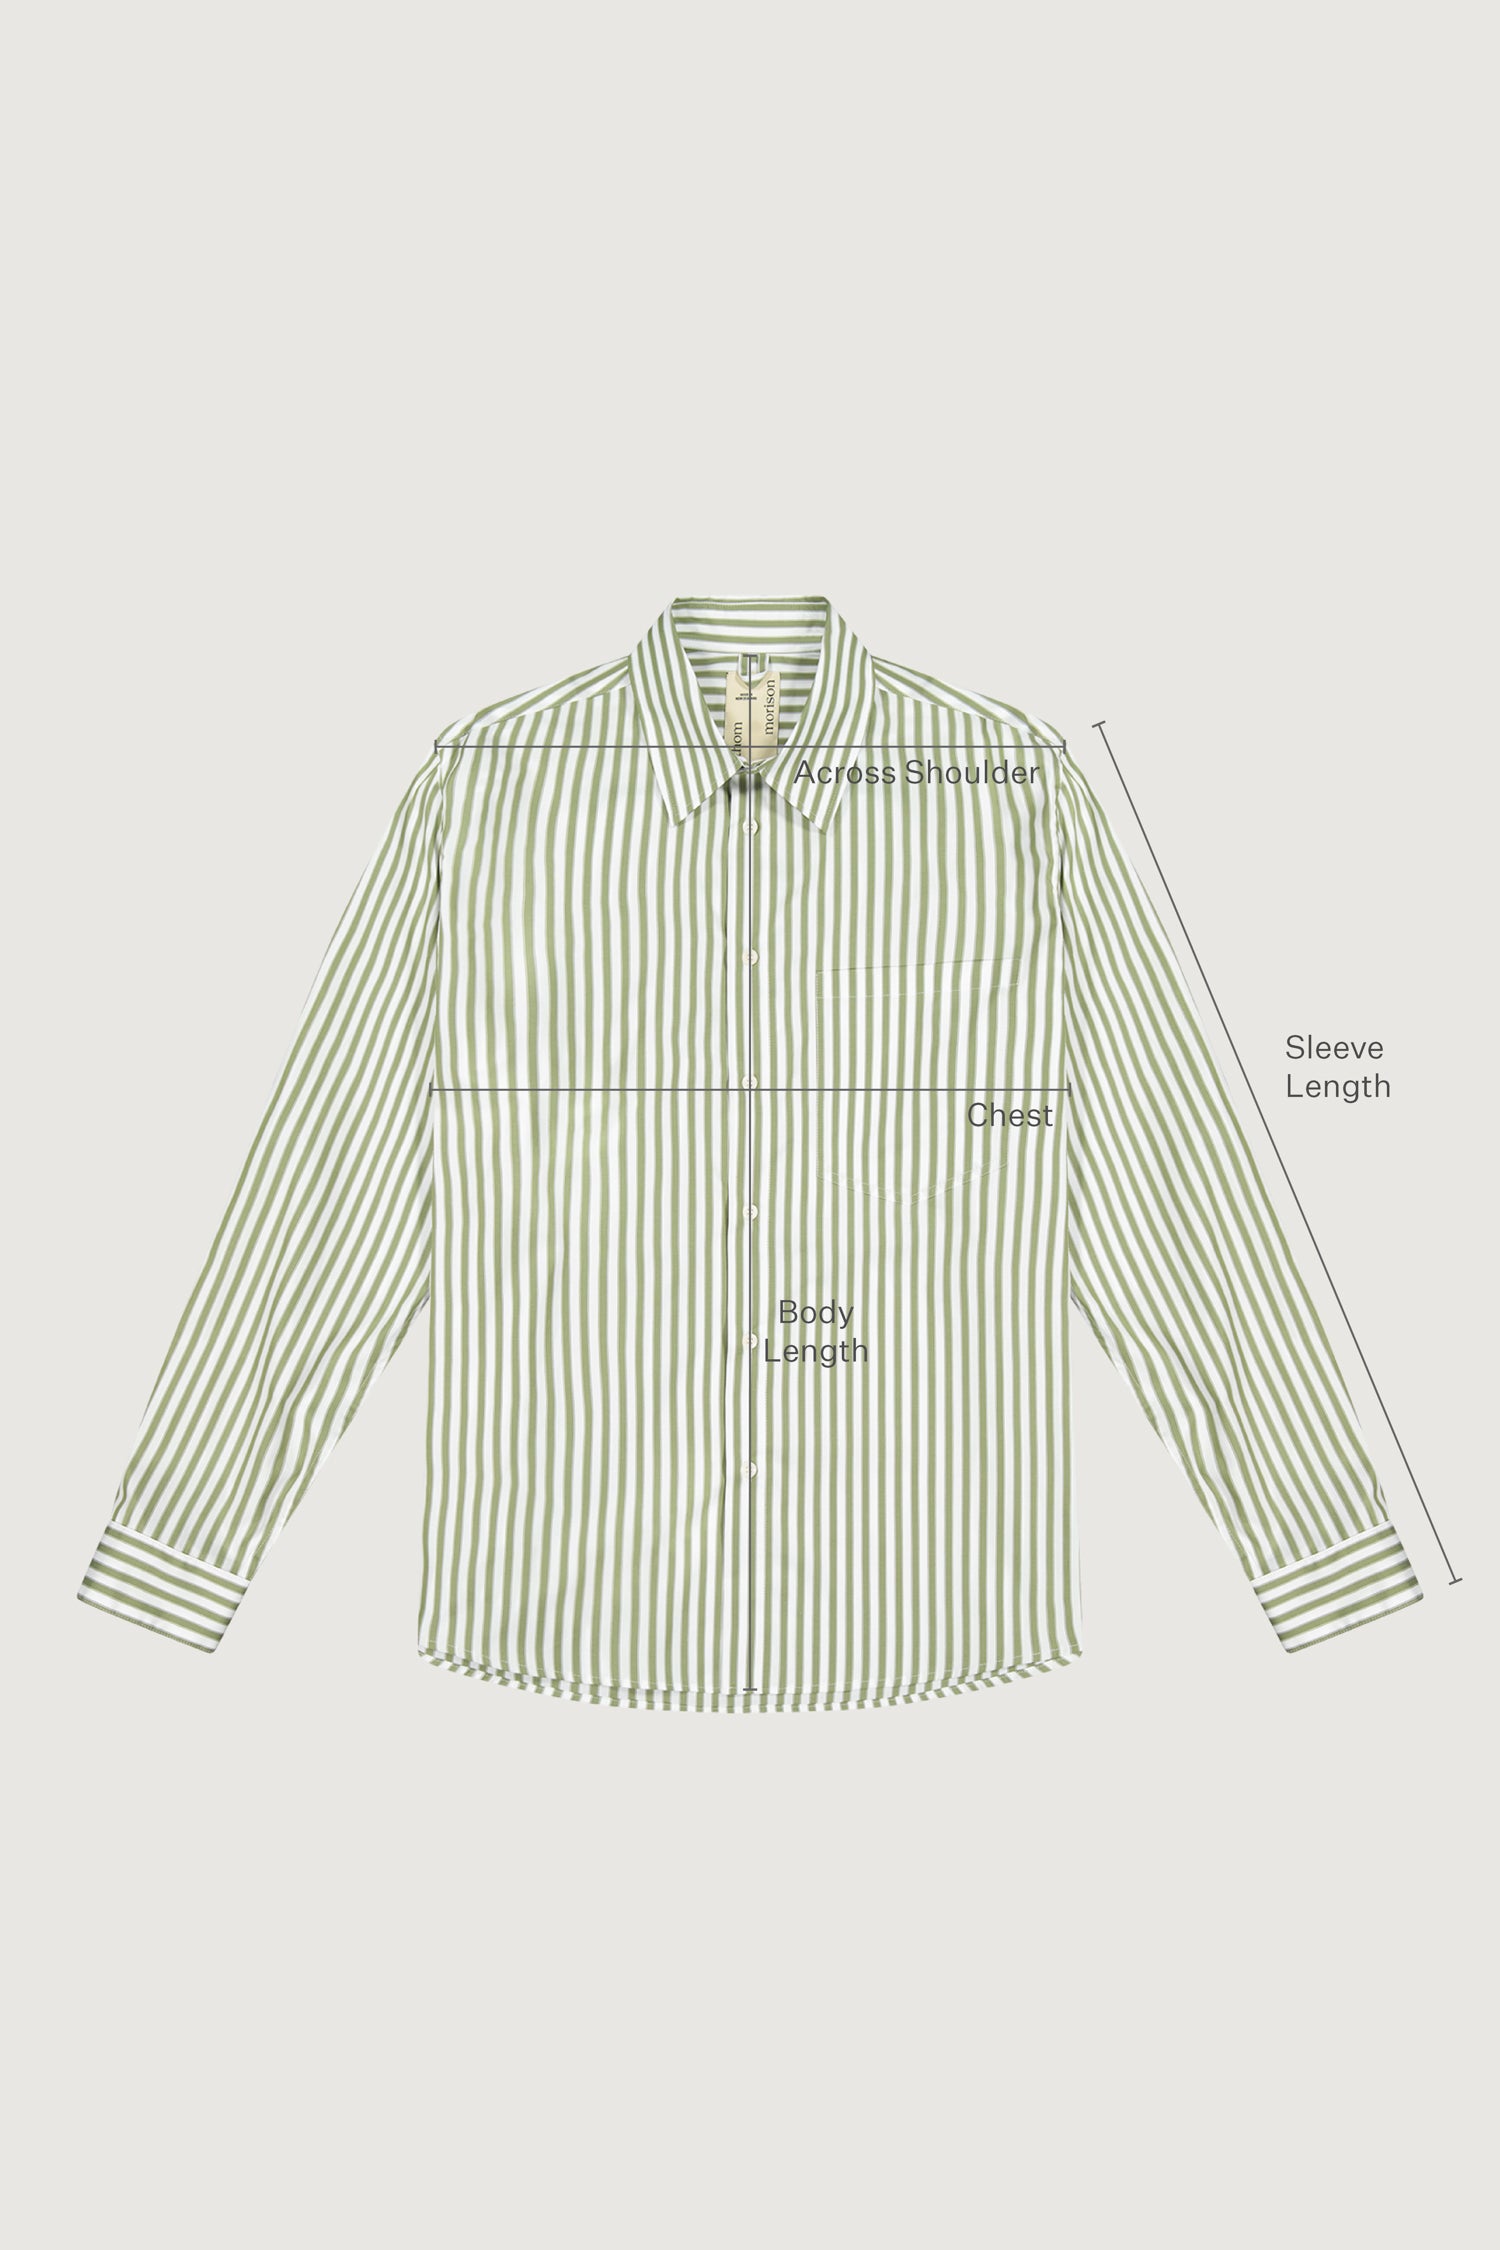 Patch Pocket Shirt - Green Stripe